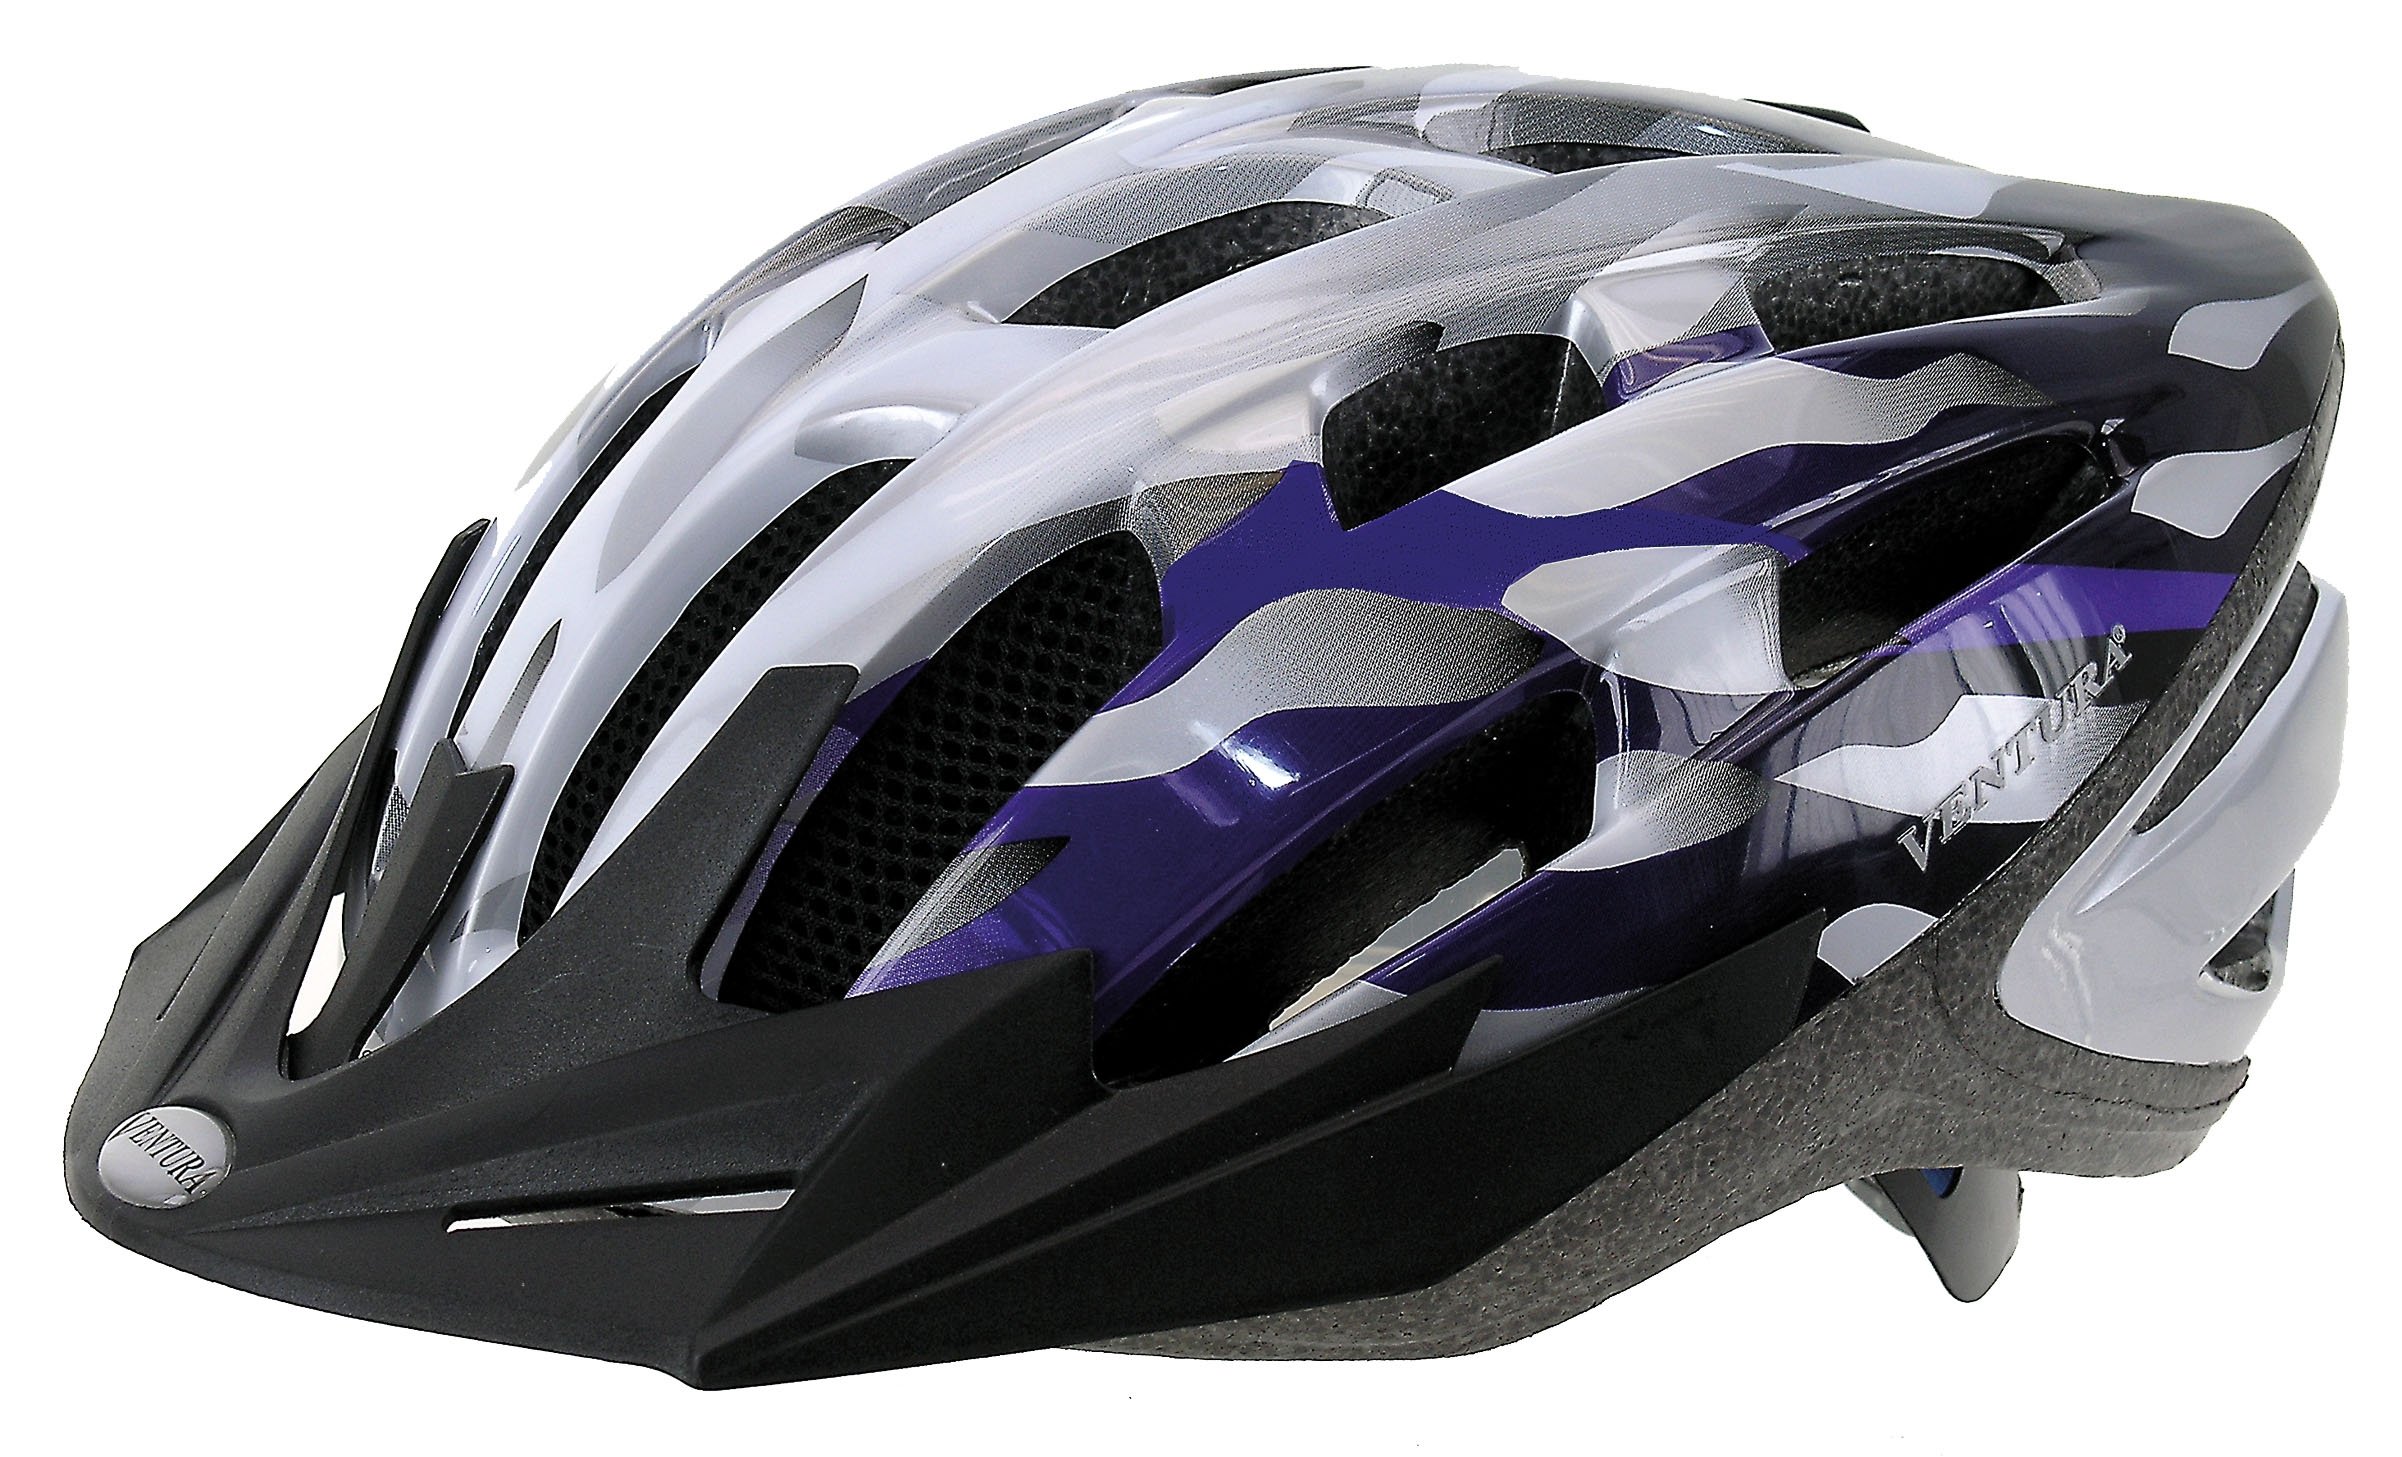 Ventura Helm Semi-in-Mold Helm, silber/weiß/ blau, L (58-61 cm)